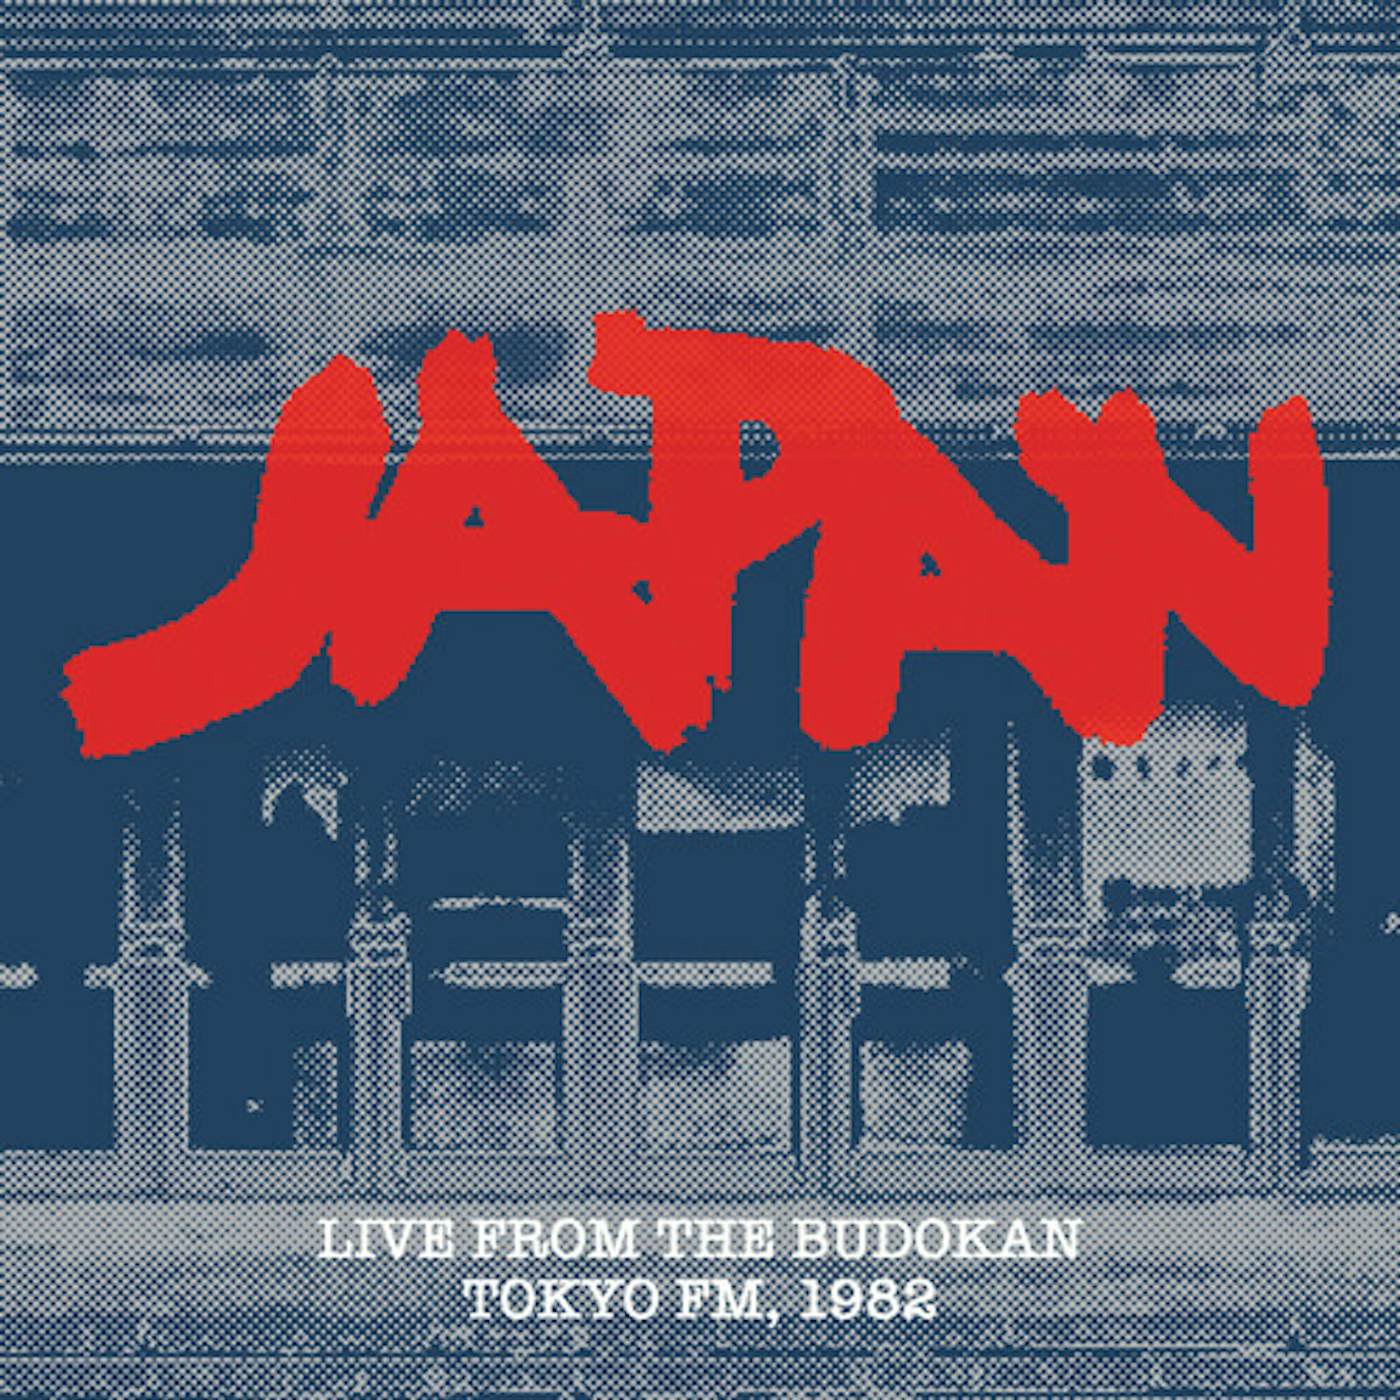 Japan FROM THE BUDOKAN TOKYO FM 1982 CD